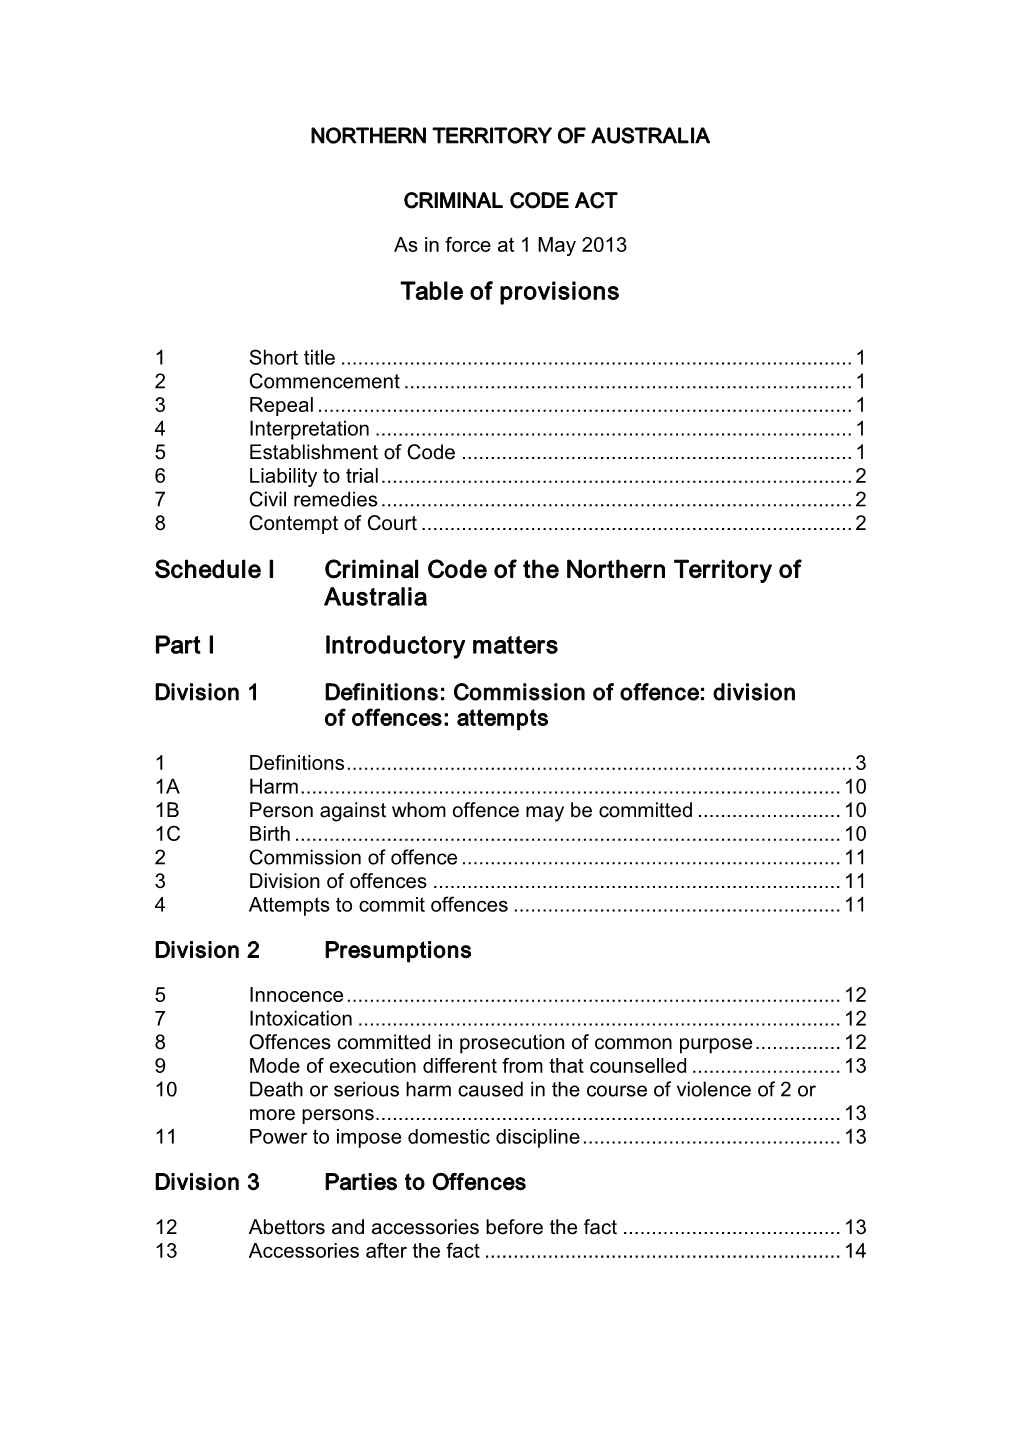 Northern Territory Criminal Code Act 2013